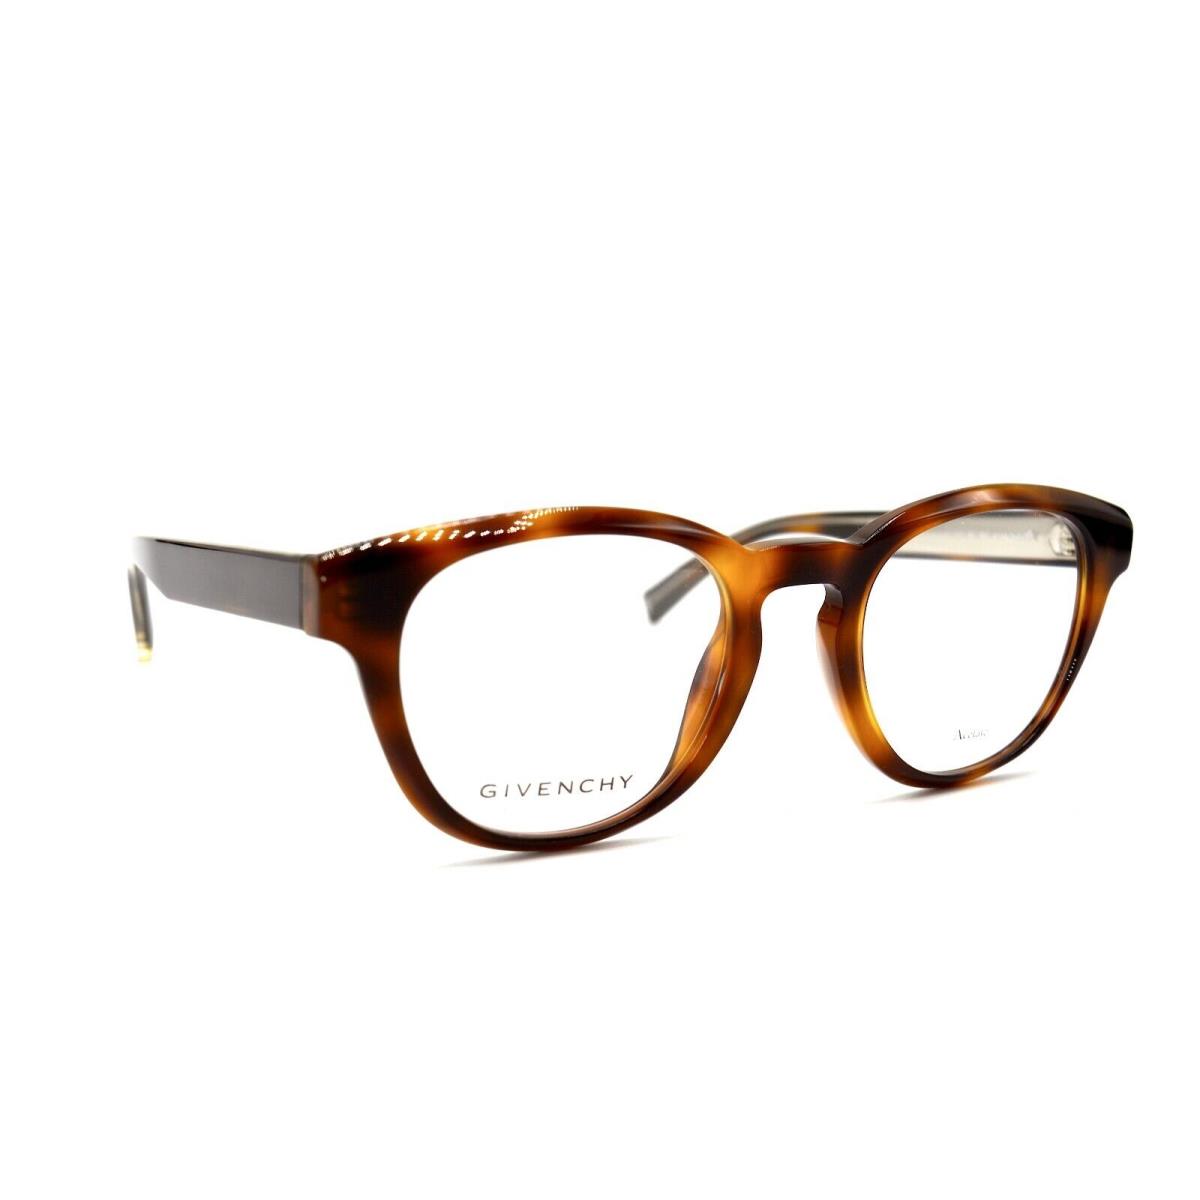 Givenchy GV0156 05L Havana 2 Eyeglasses Frames RX 49-22